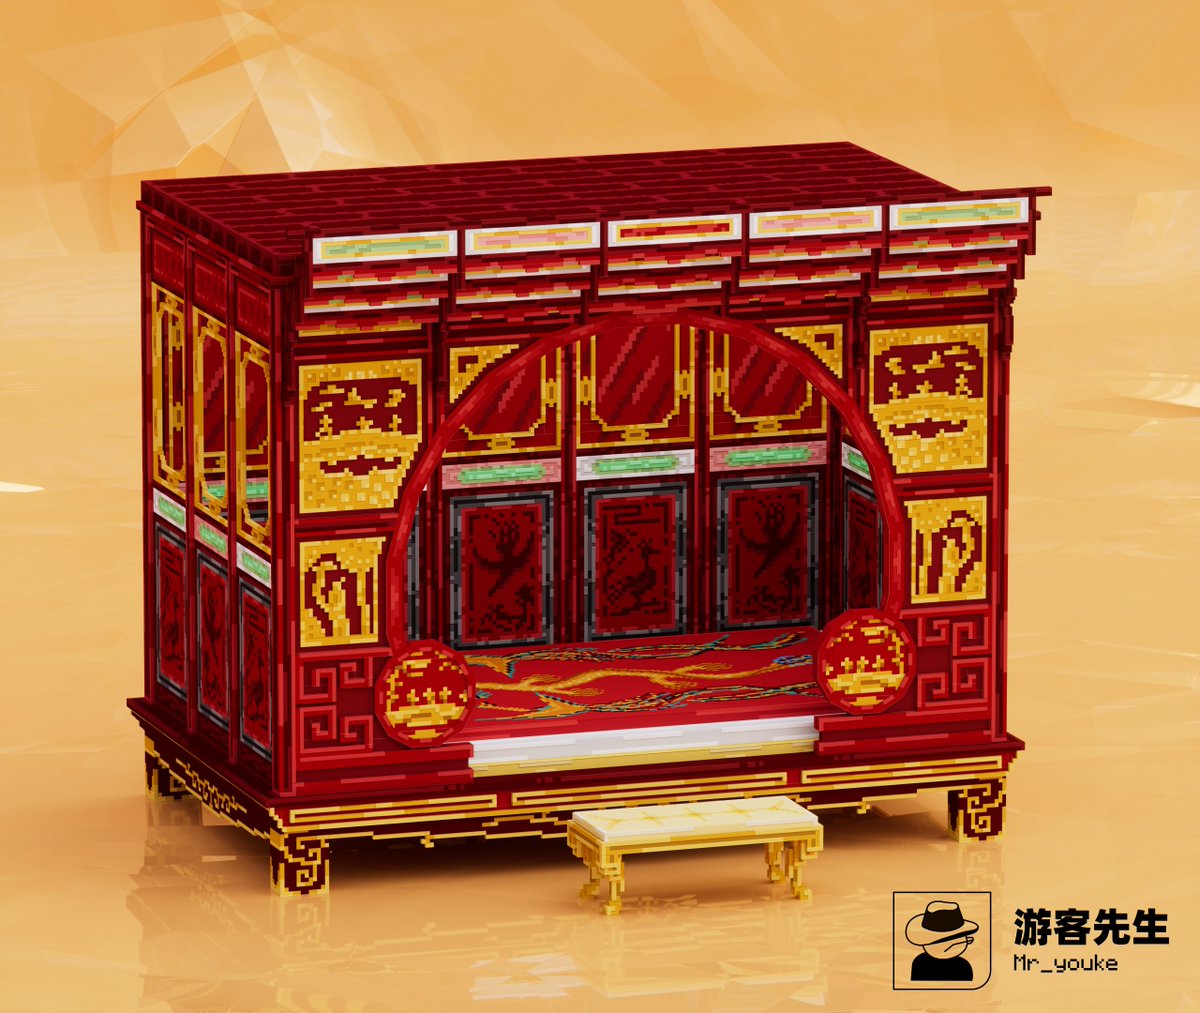 Chinese furniture series——Chinese style bed

#TheSandbox #sandboxgame #voxel #voxelart #TSBCreator #VoxEdit #Metaverse #sandfam #NFTartwork #3Dartist #3dartwork #crypto #3D #dragons